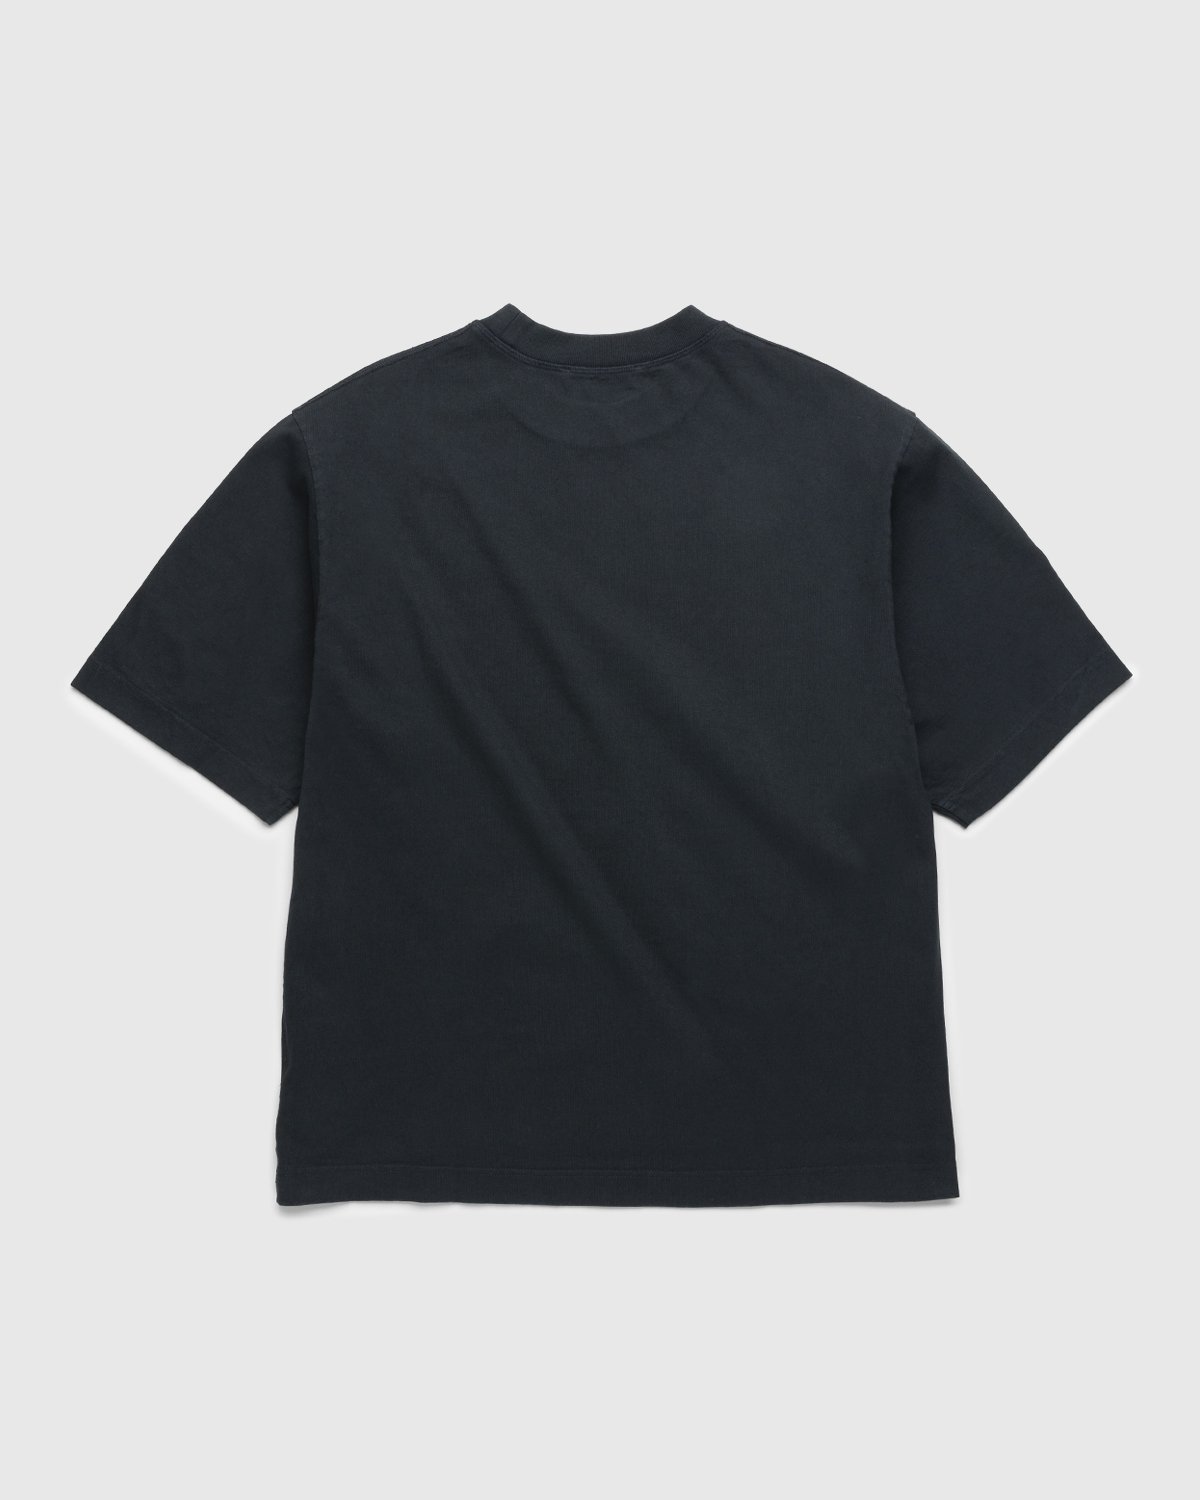 Acne Studios - Organic Cotton Logo T-Shirt Black - Clothing - Black - Image 2